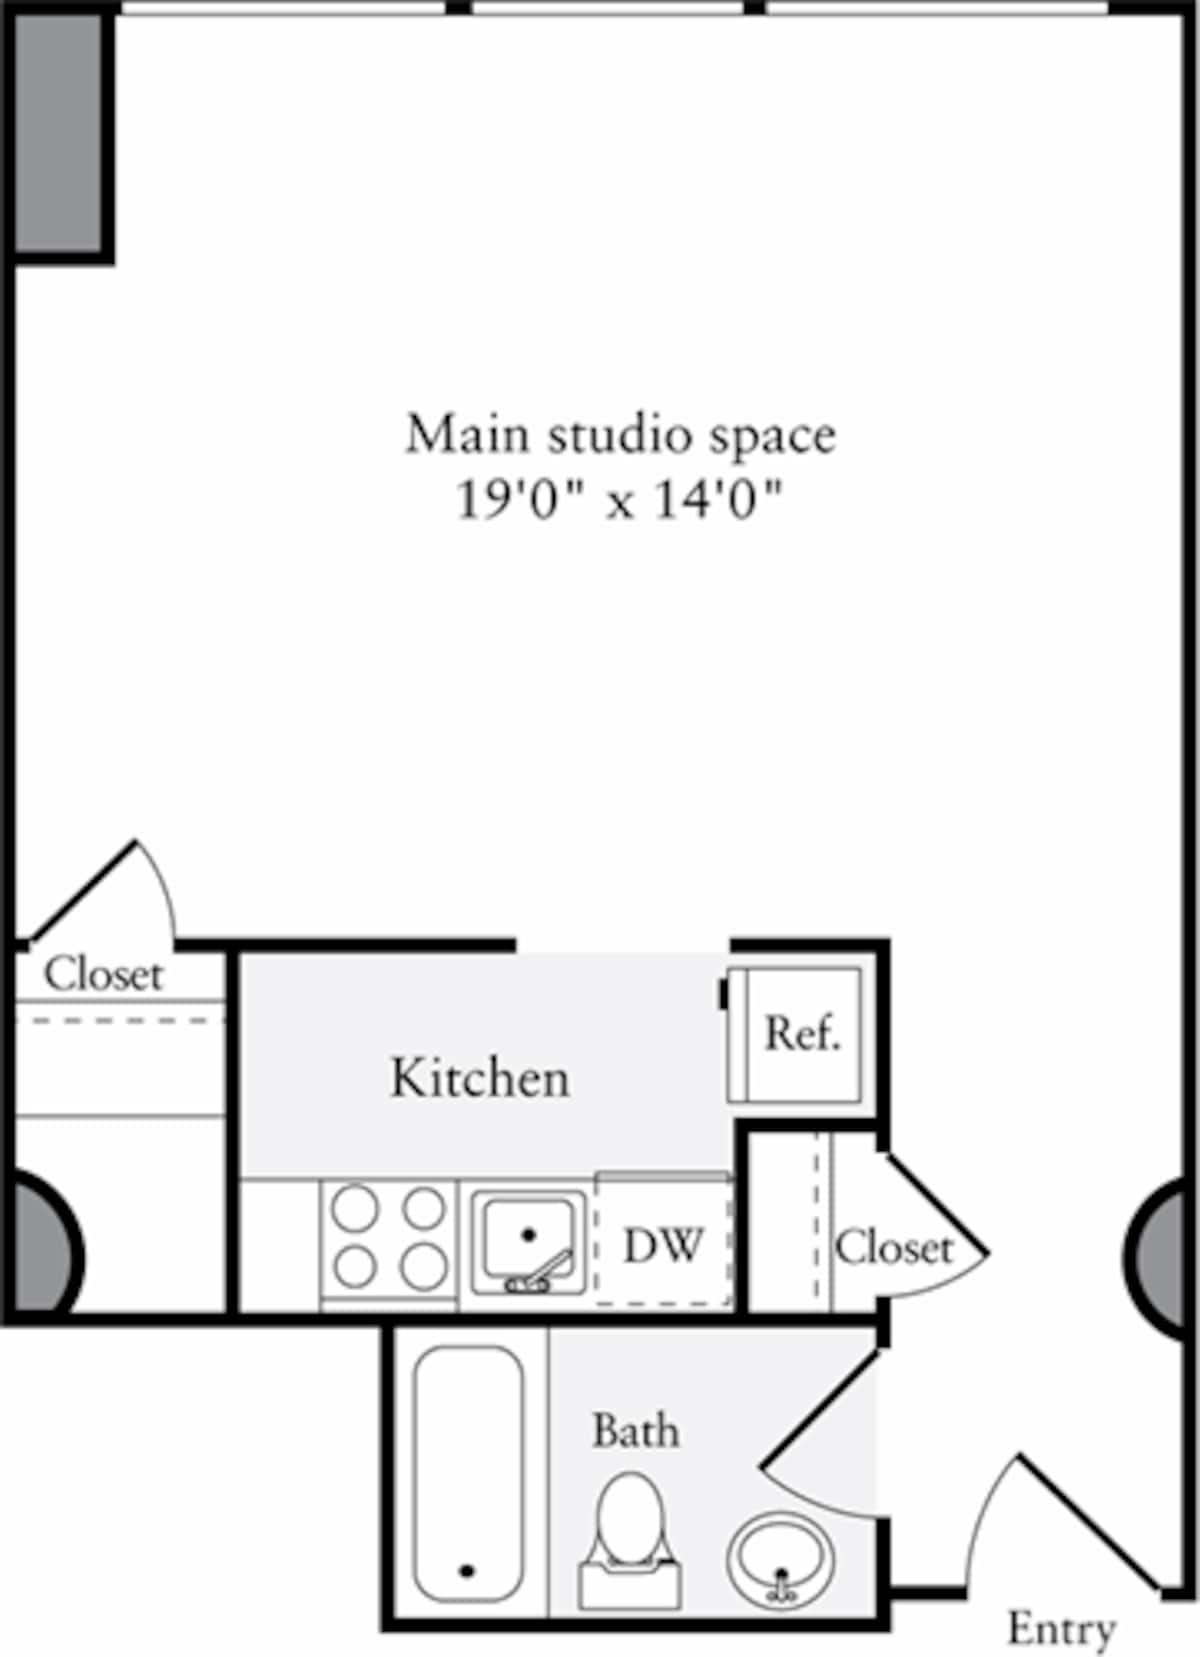 Floorplan diagram for The Lofts Studio B, showing Studio